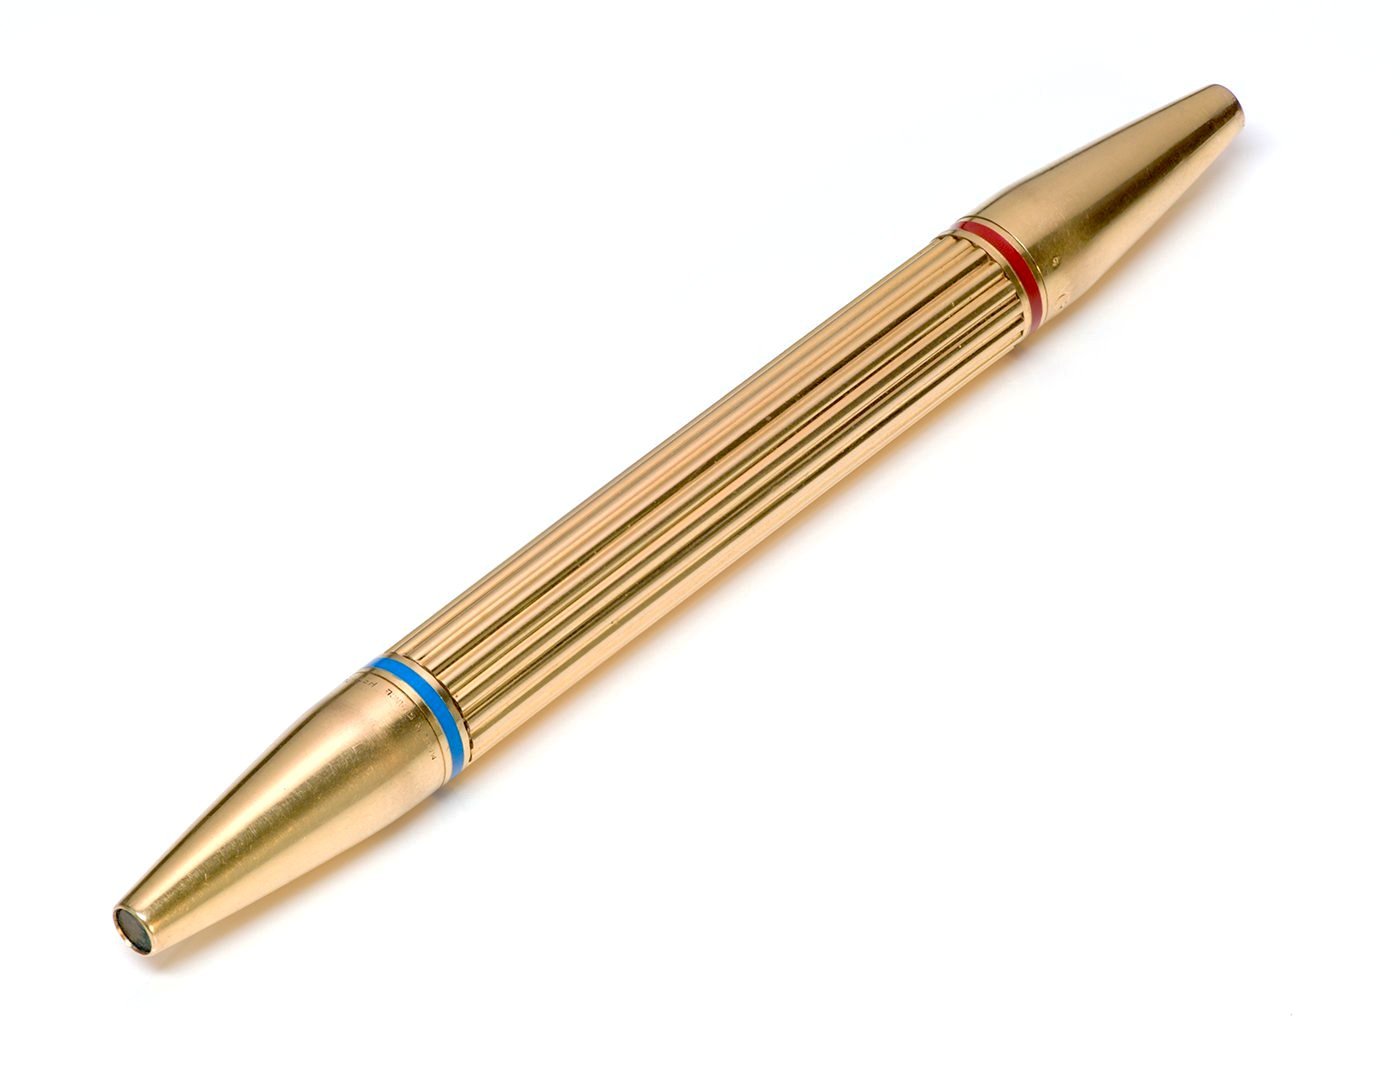 Hermès 18K Gold "Porte Mine" Automatic Pencil